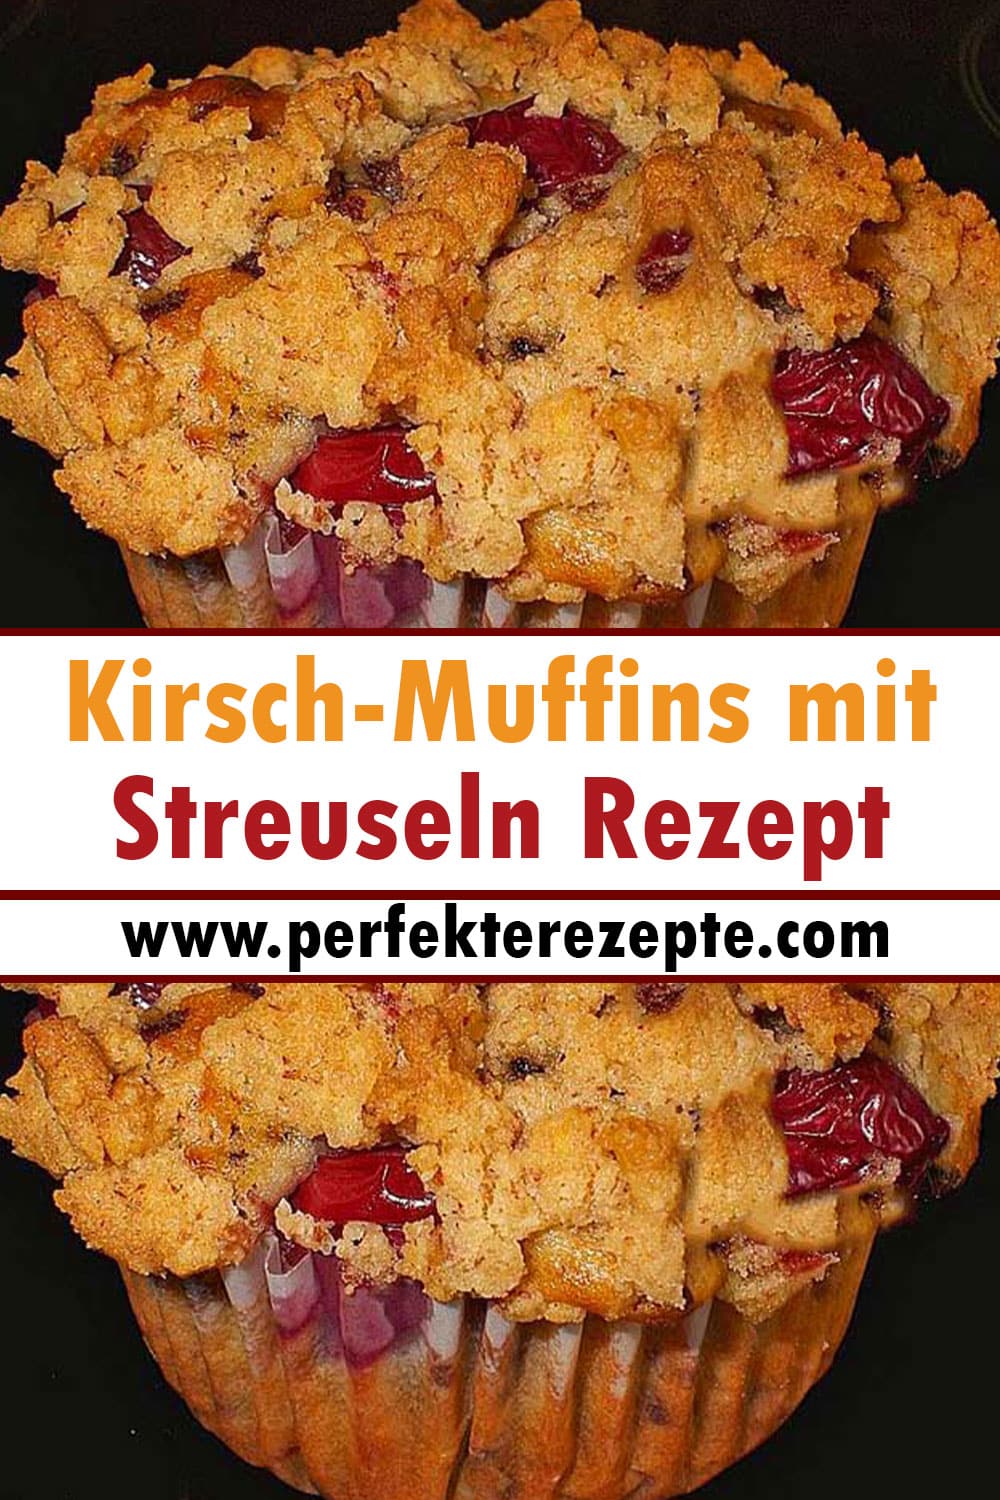 Kirsch-Muffins mit Streuseln Rezept